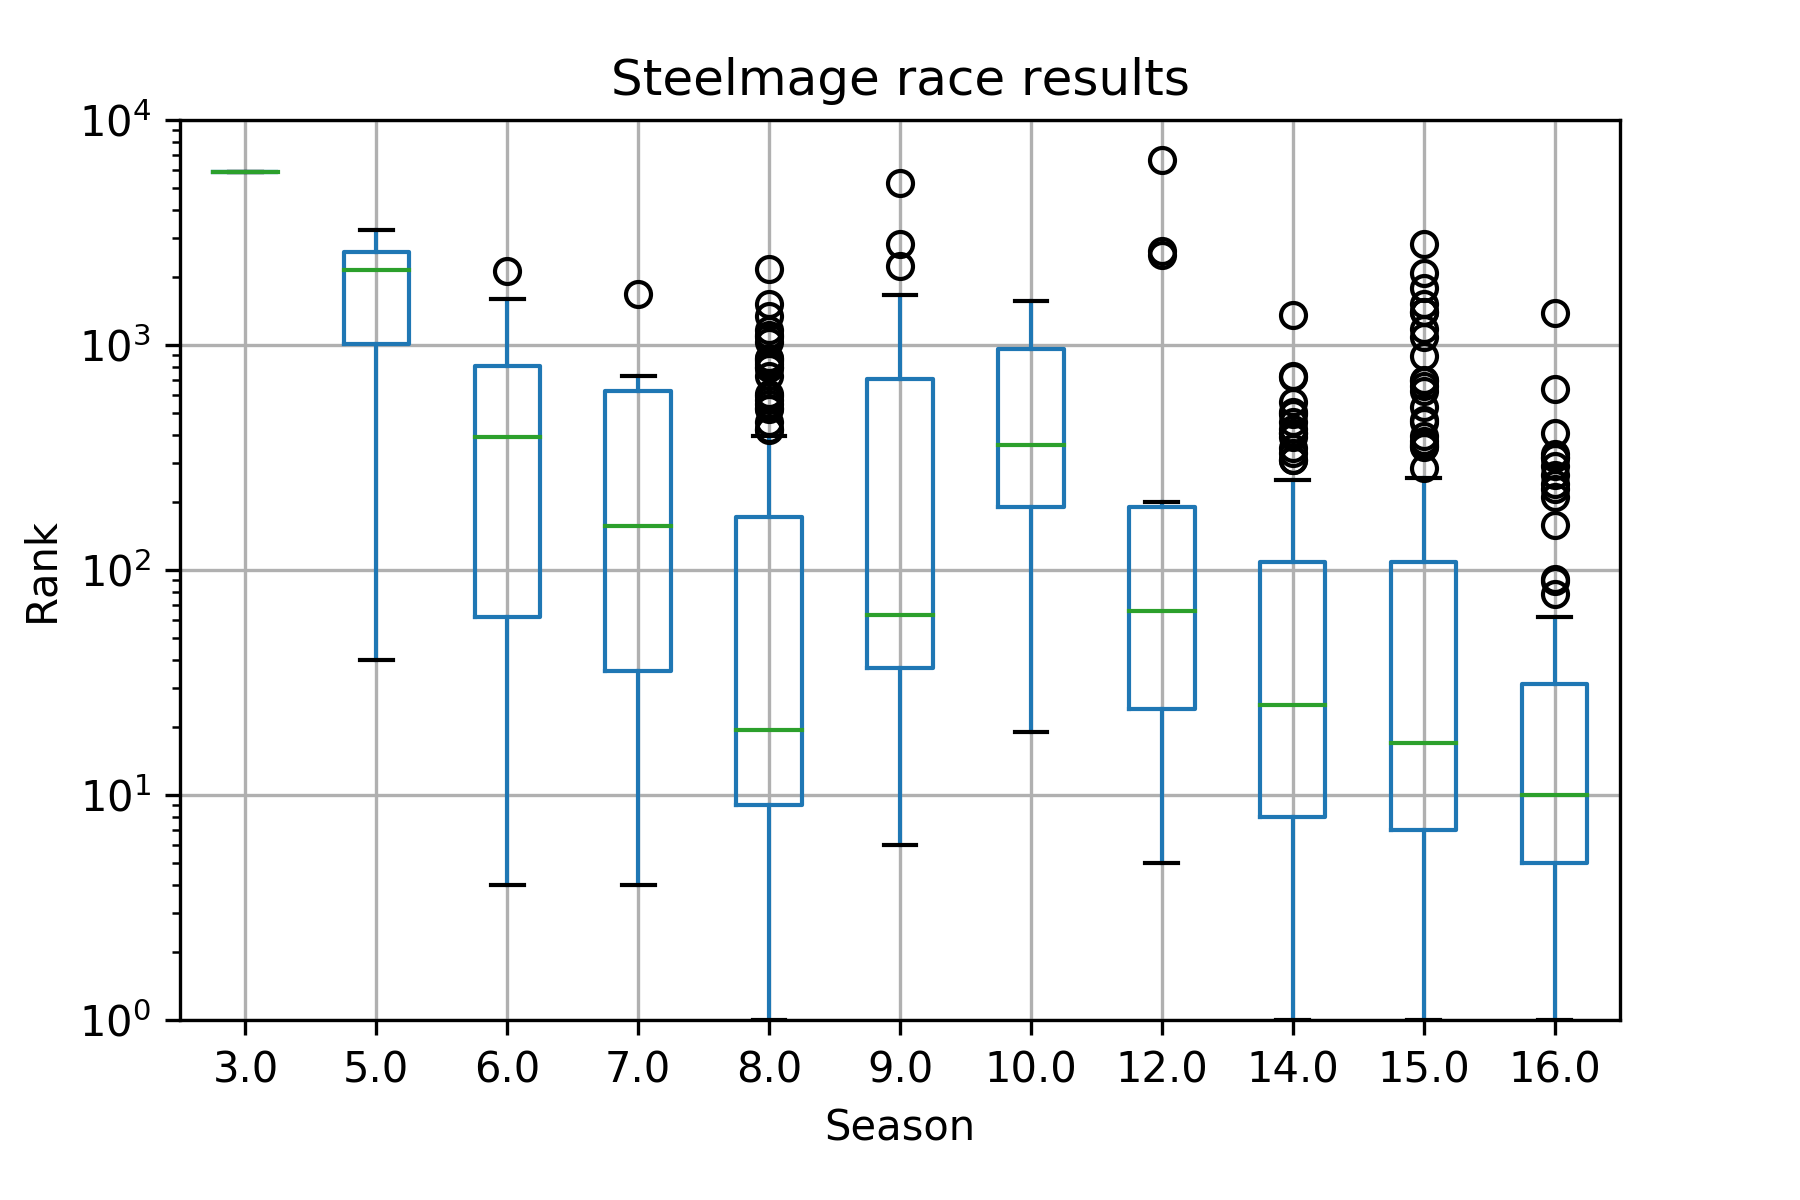 Steelmage race consistency